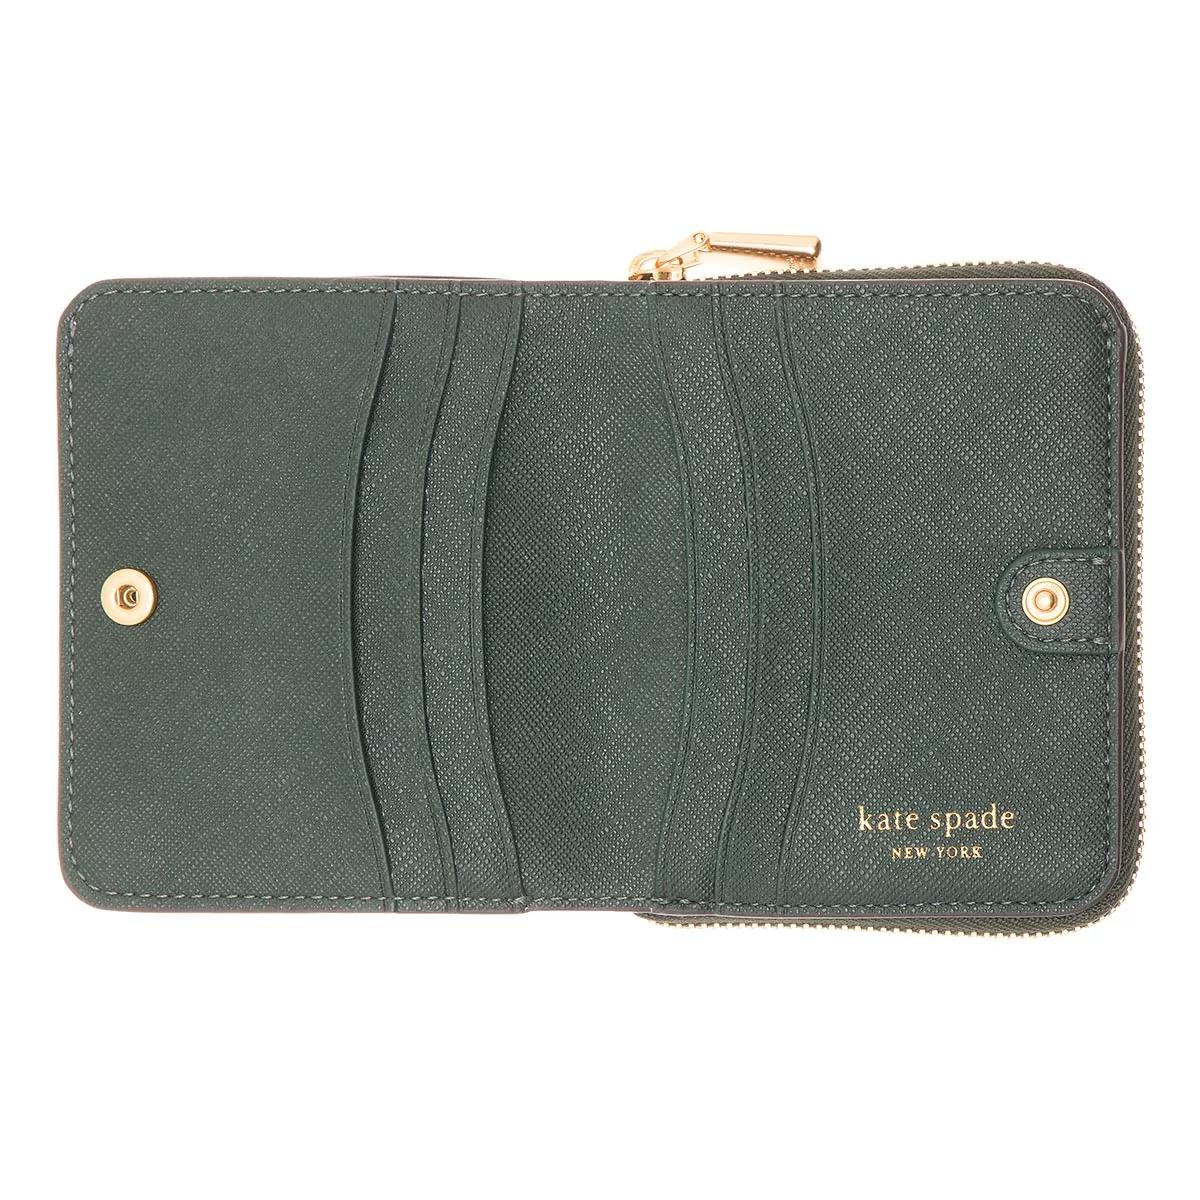 Kate Spade New York Morgan Leopard Small Compact Wallet